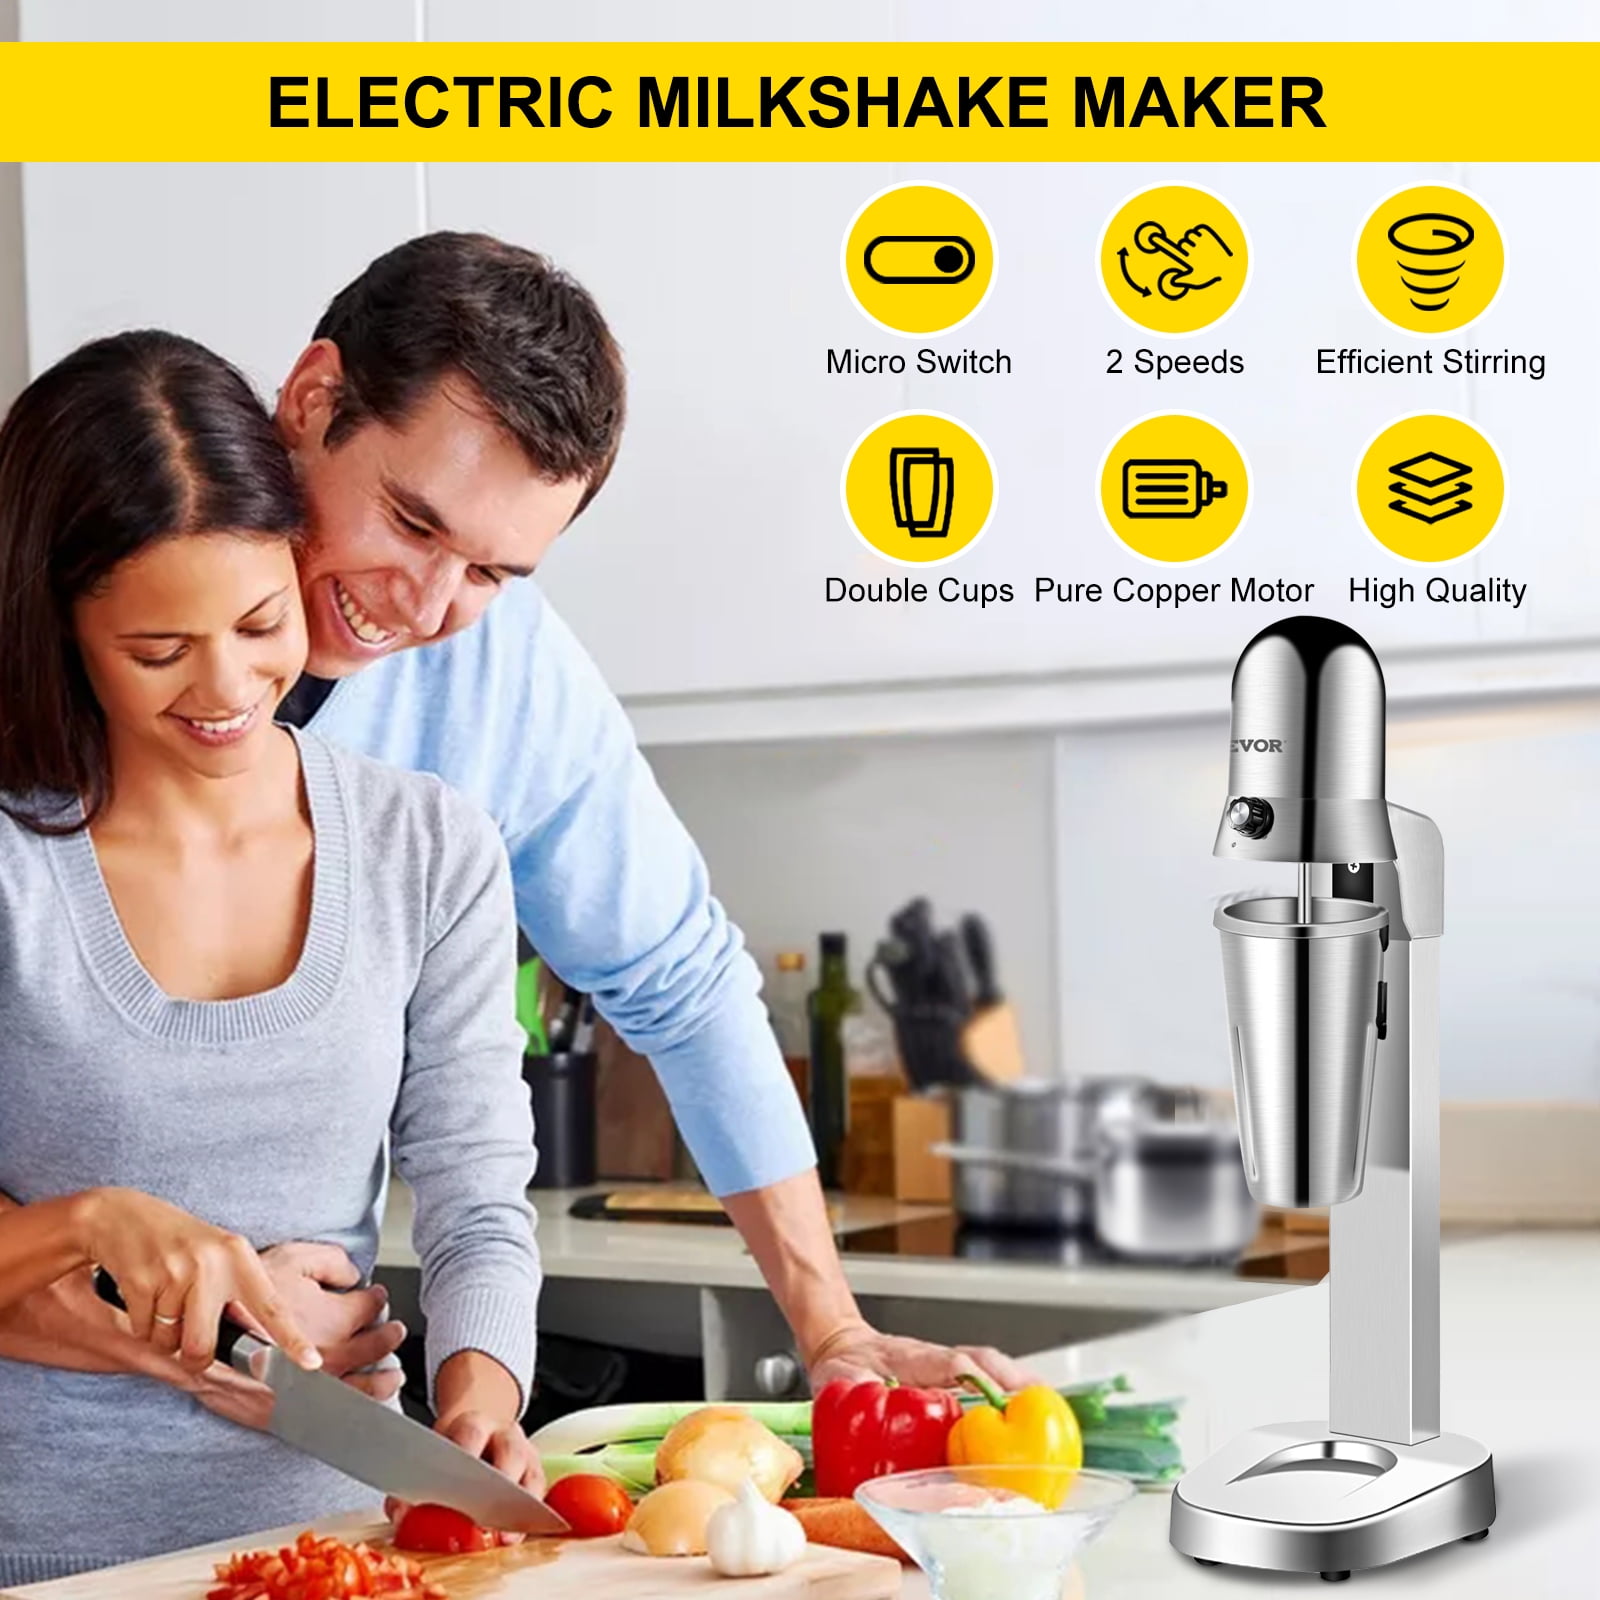 VEVOR, STNXJPTYS00000001V1, 180W Electric Milkshake Maker Drink Mixer